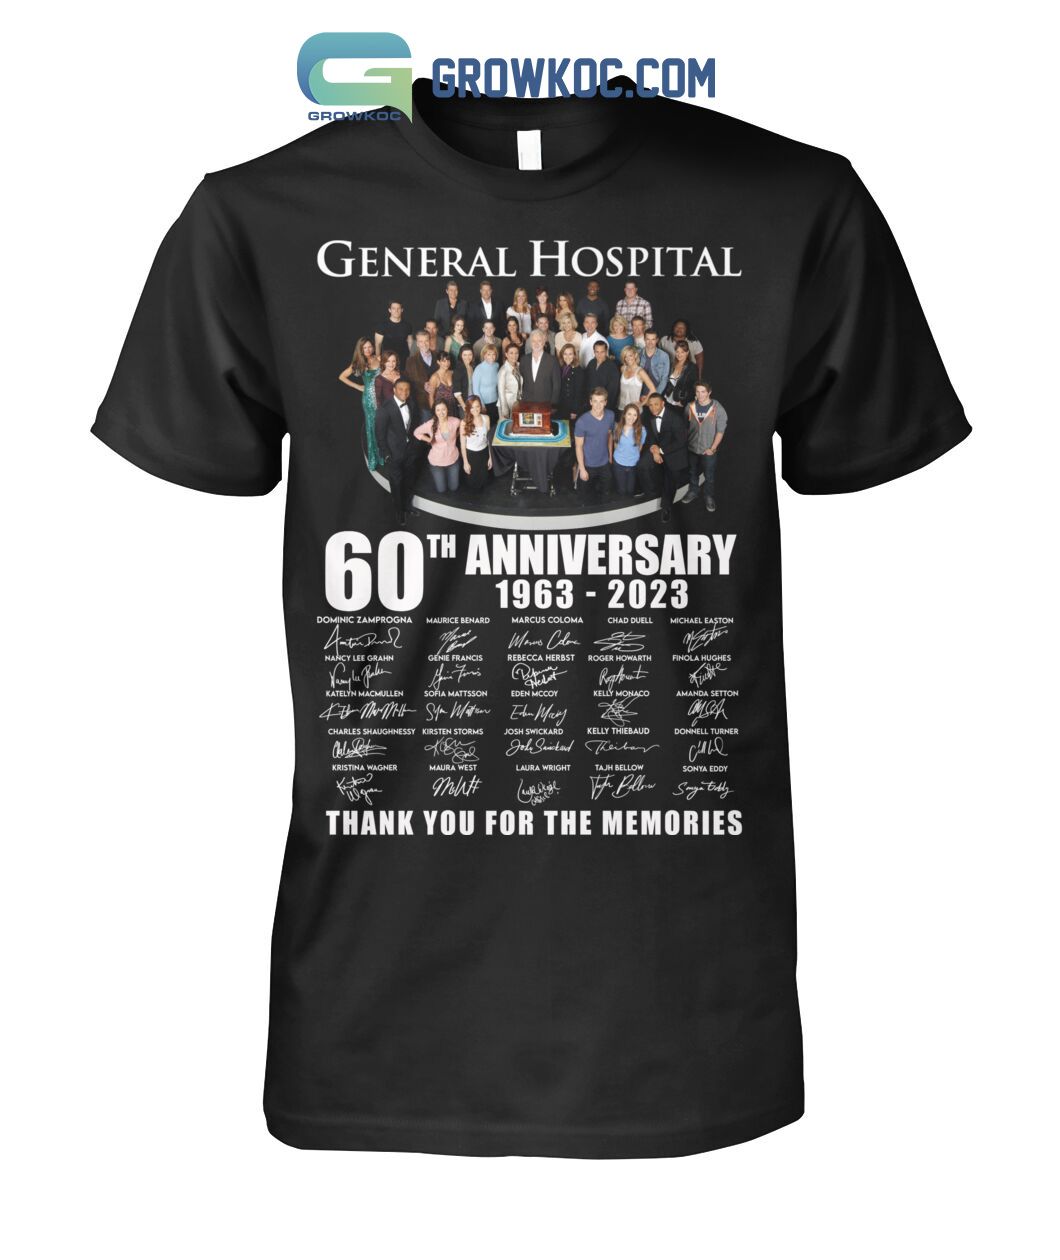 General Hospital 60th Anniversary 1963-2023 T-Shirt